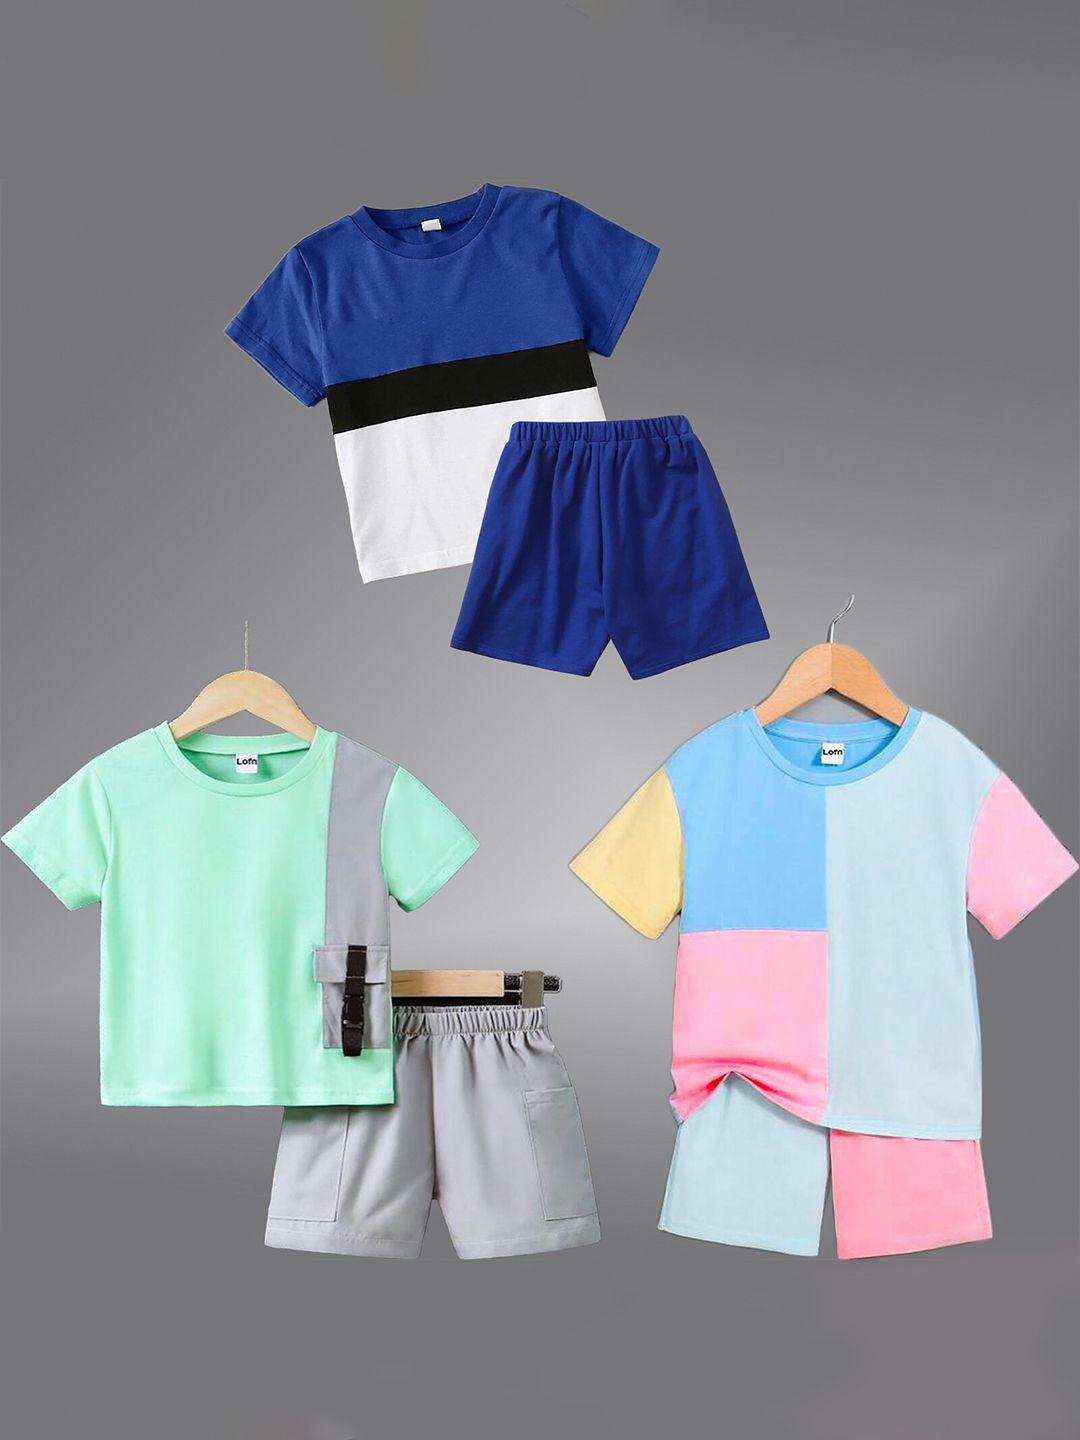 baesd-unisex-kids-navy-blue-&-grey-colourblocked-t-shirt-with-shorts